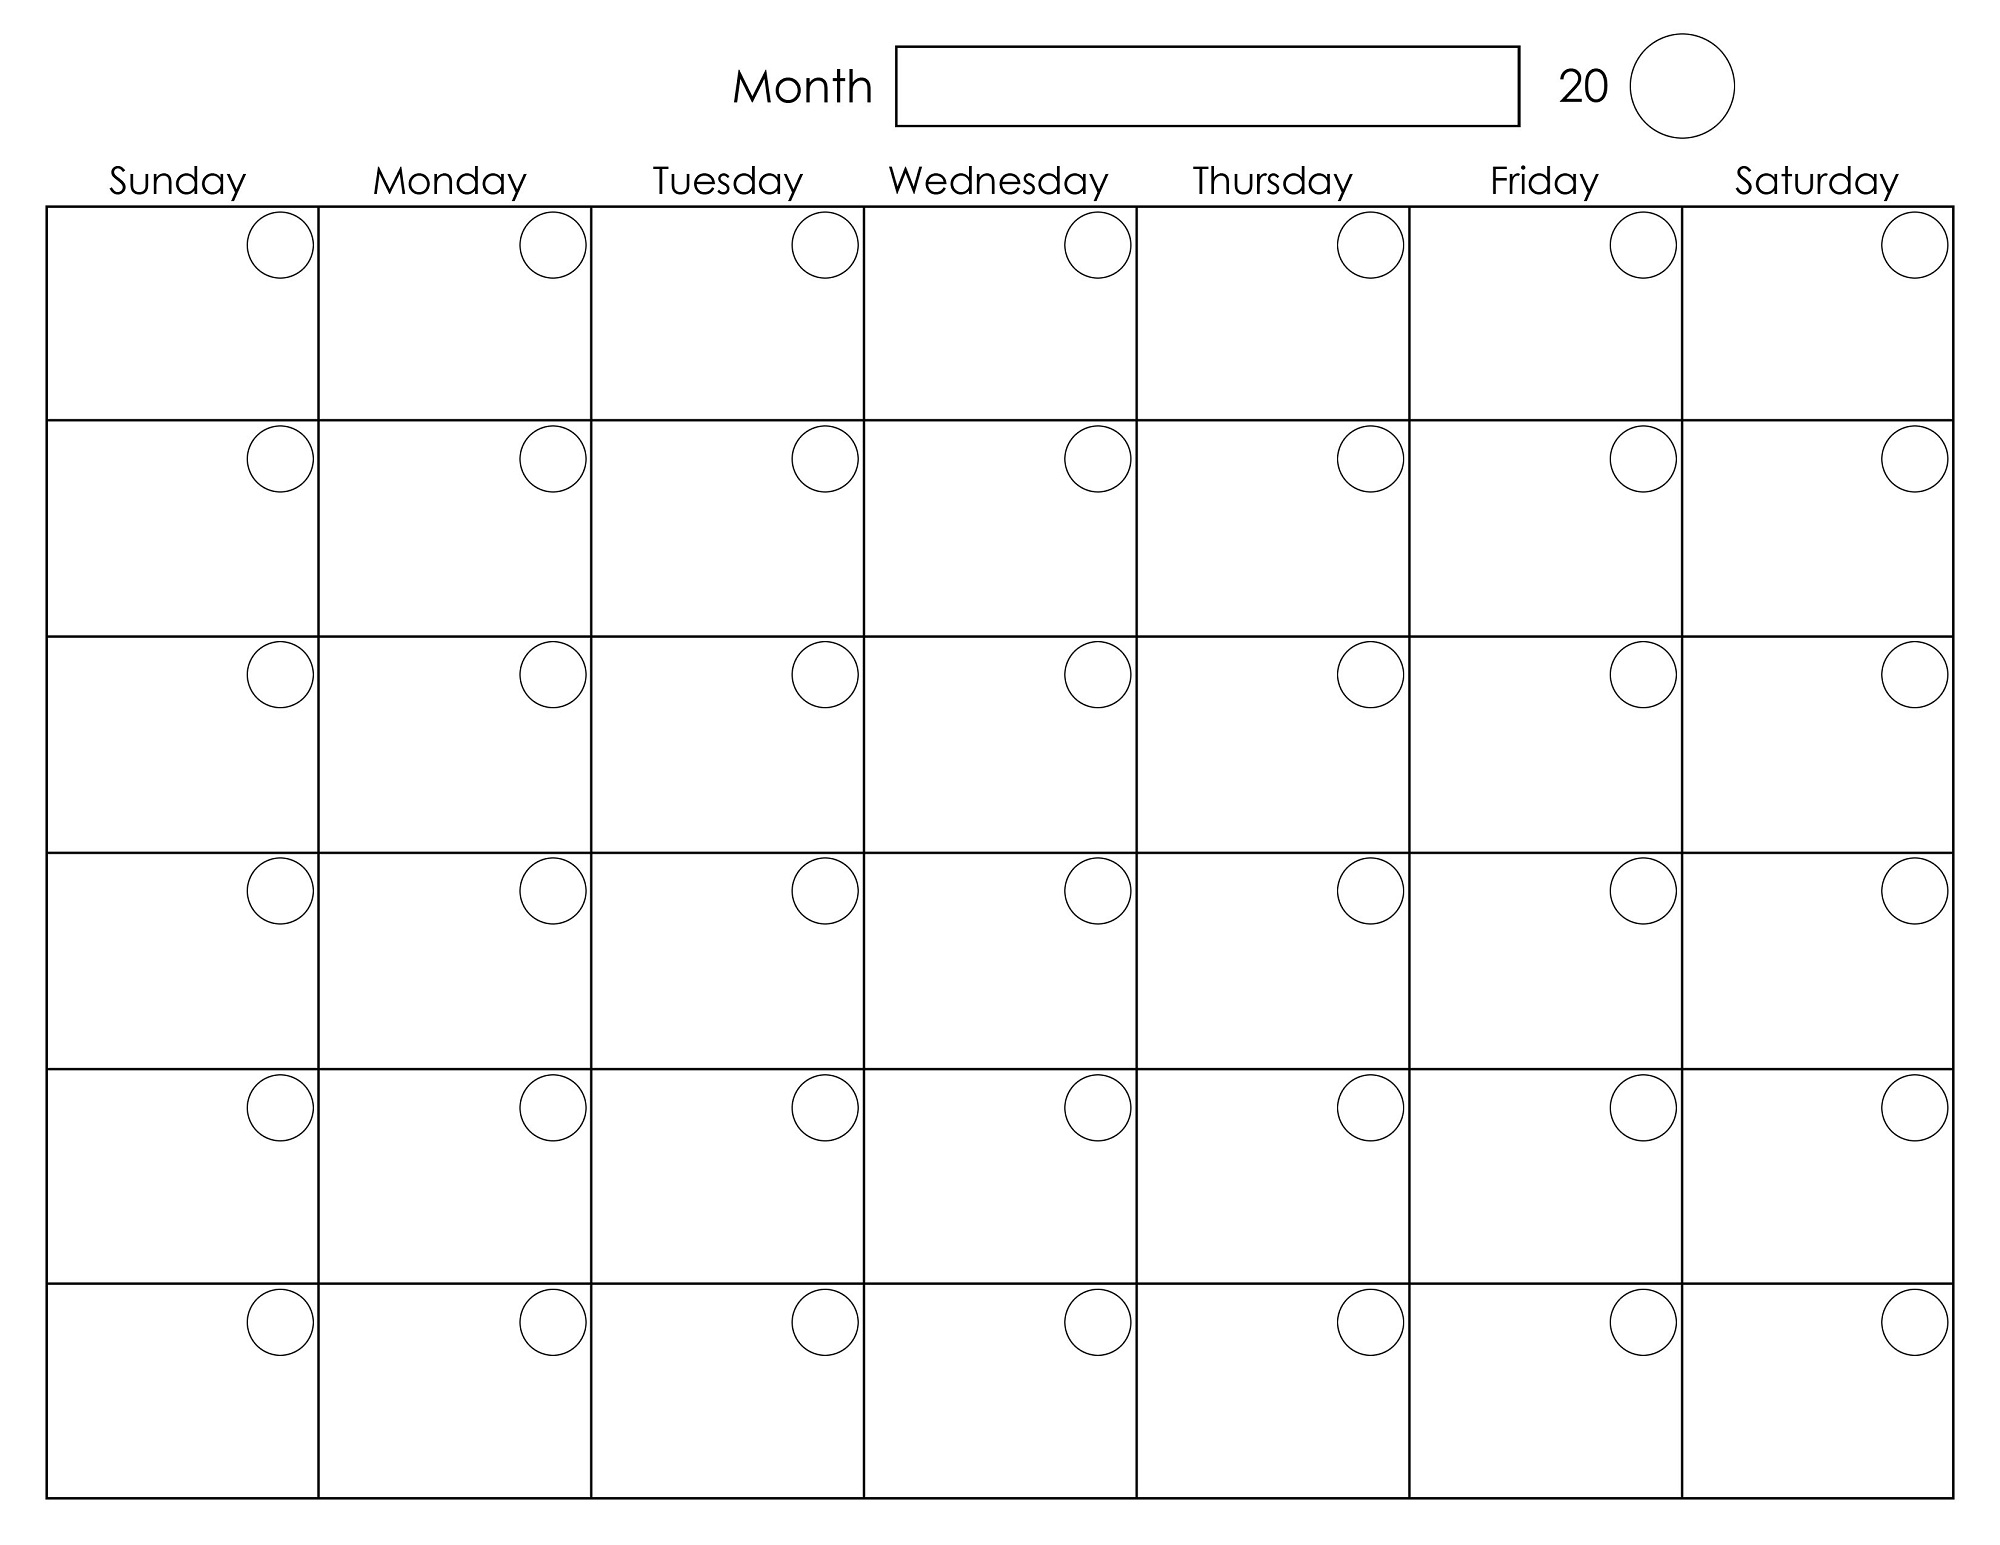 Free Printable Blank Weekly Calendar Template Printable Templates